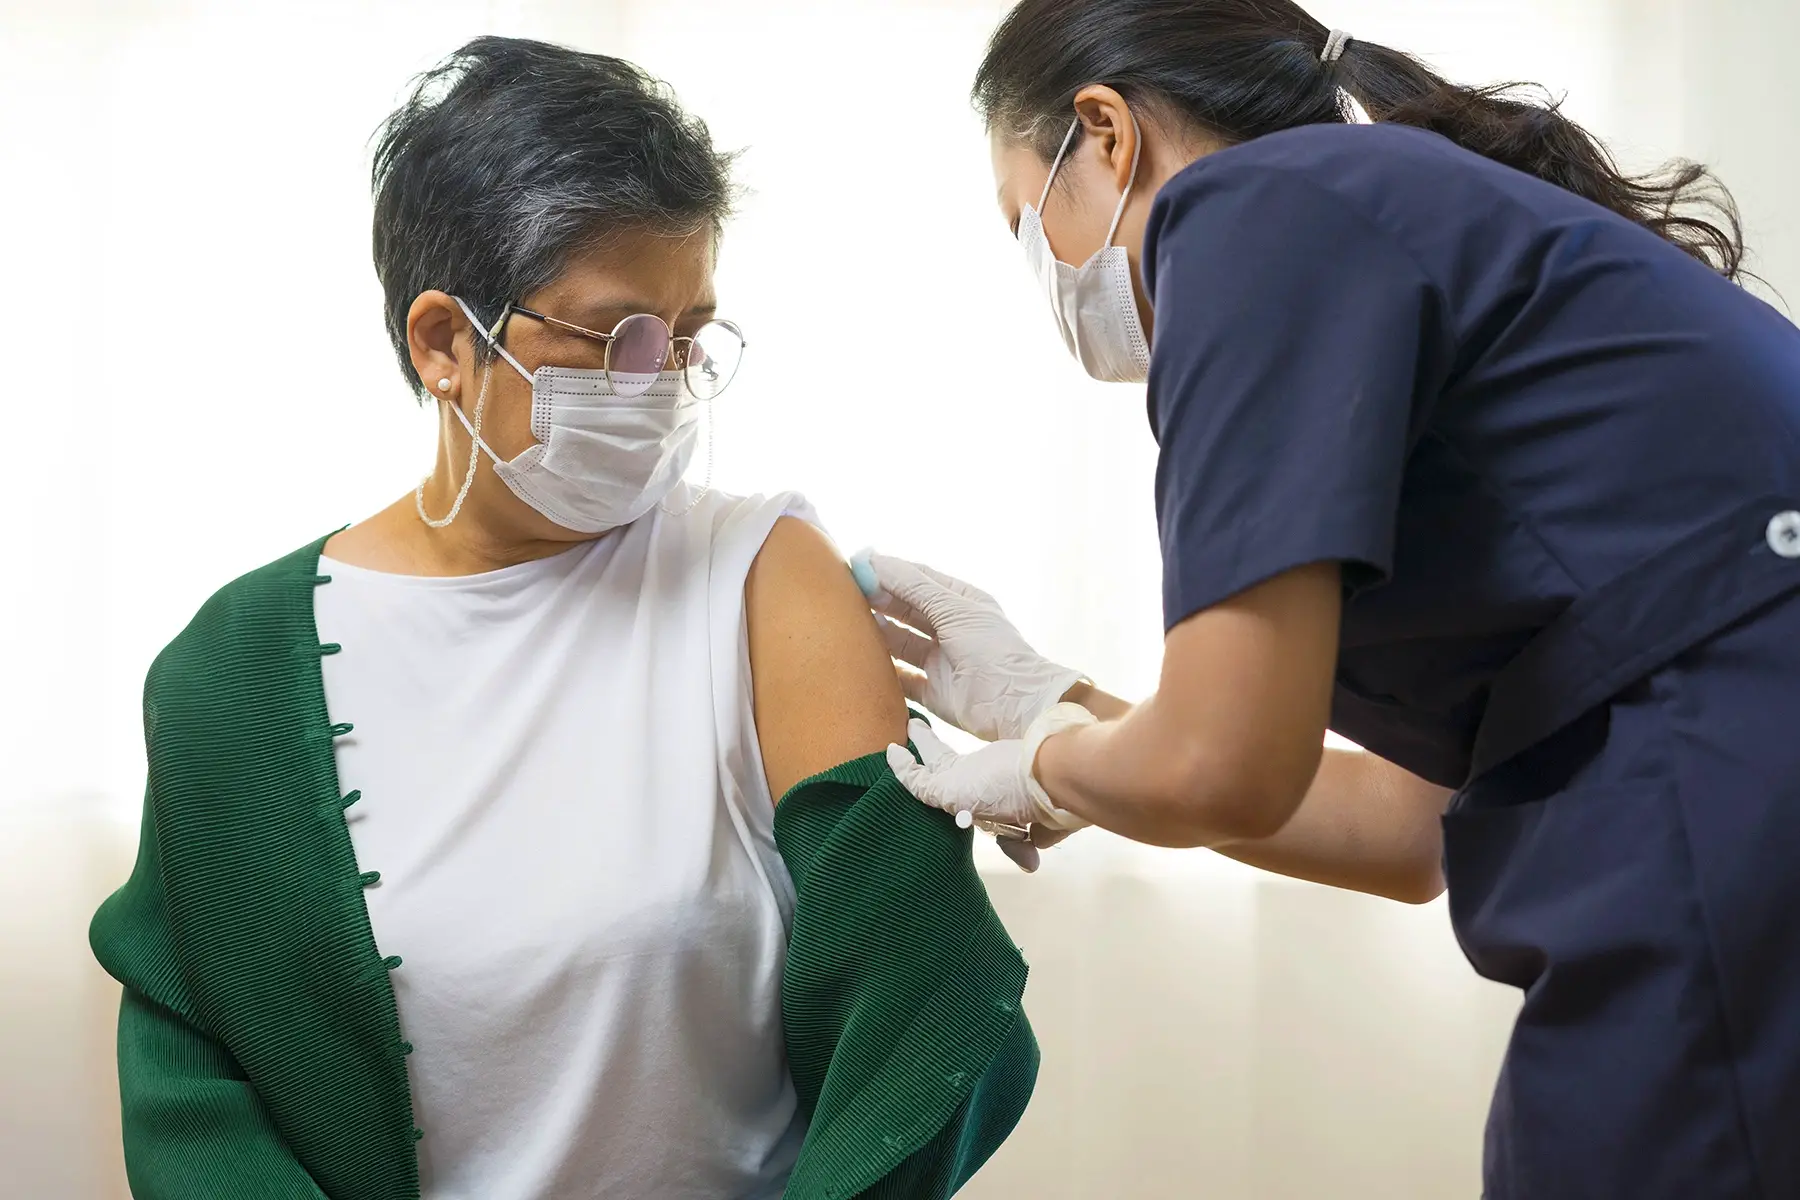 Nurse prepares an adult woman's arm for a vaccination